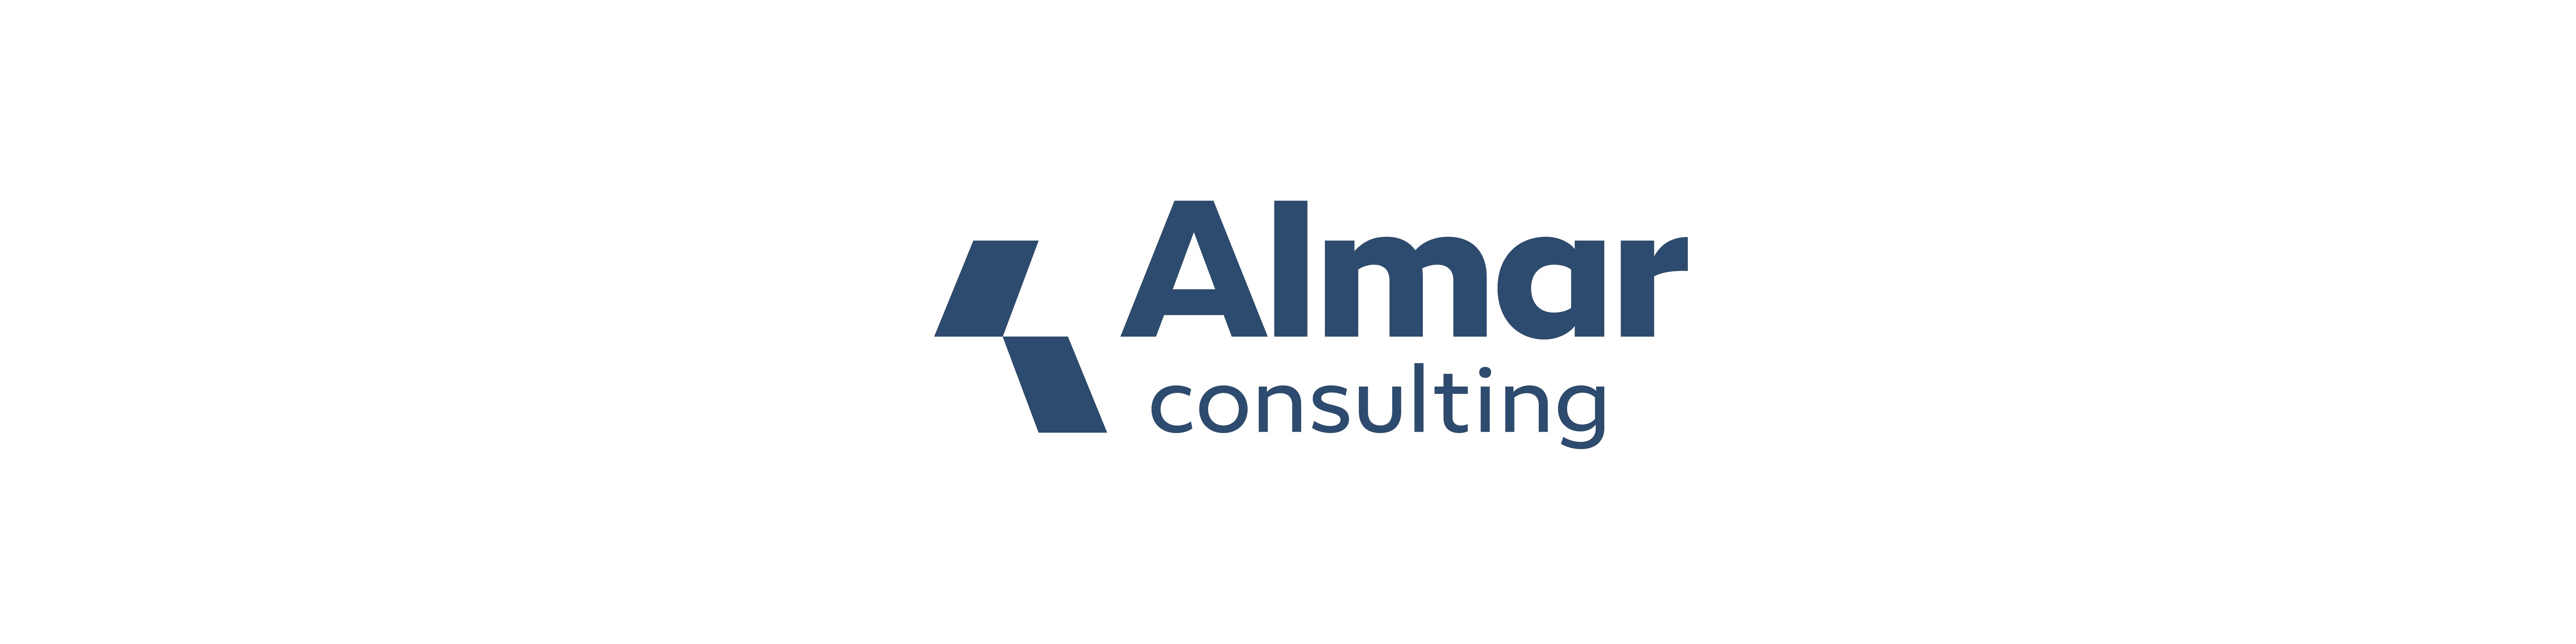 Almar Consulting logo